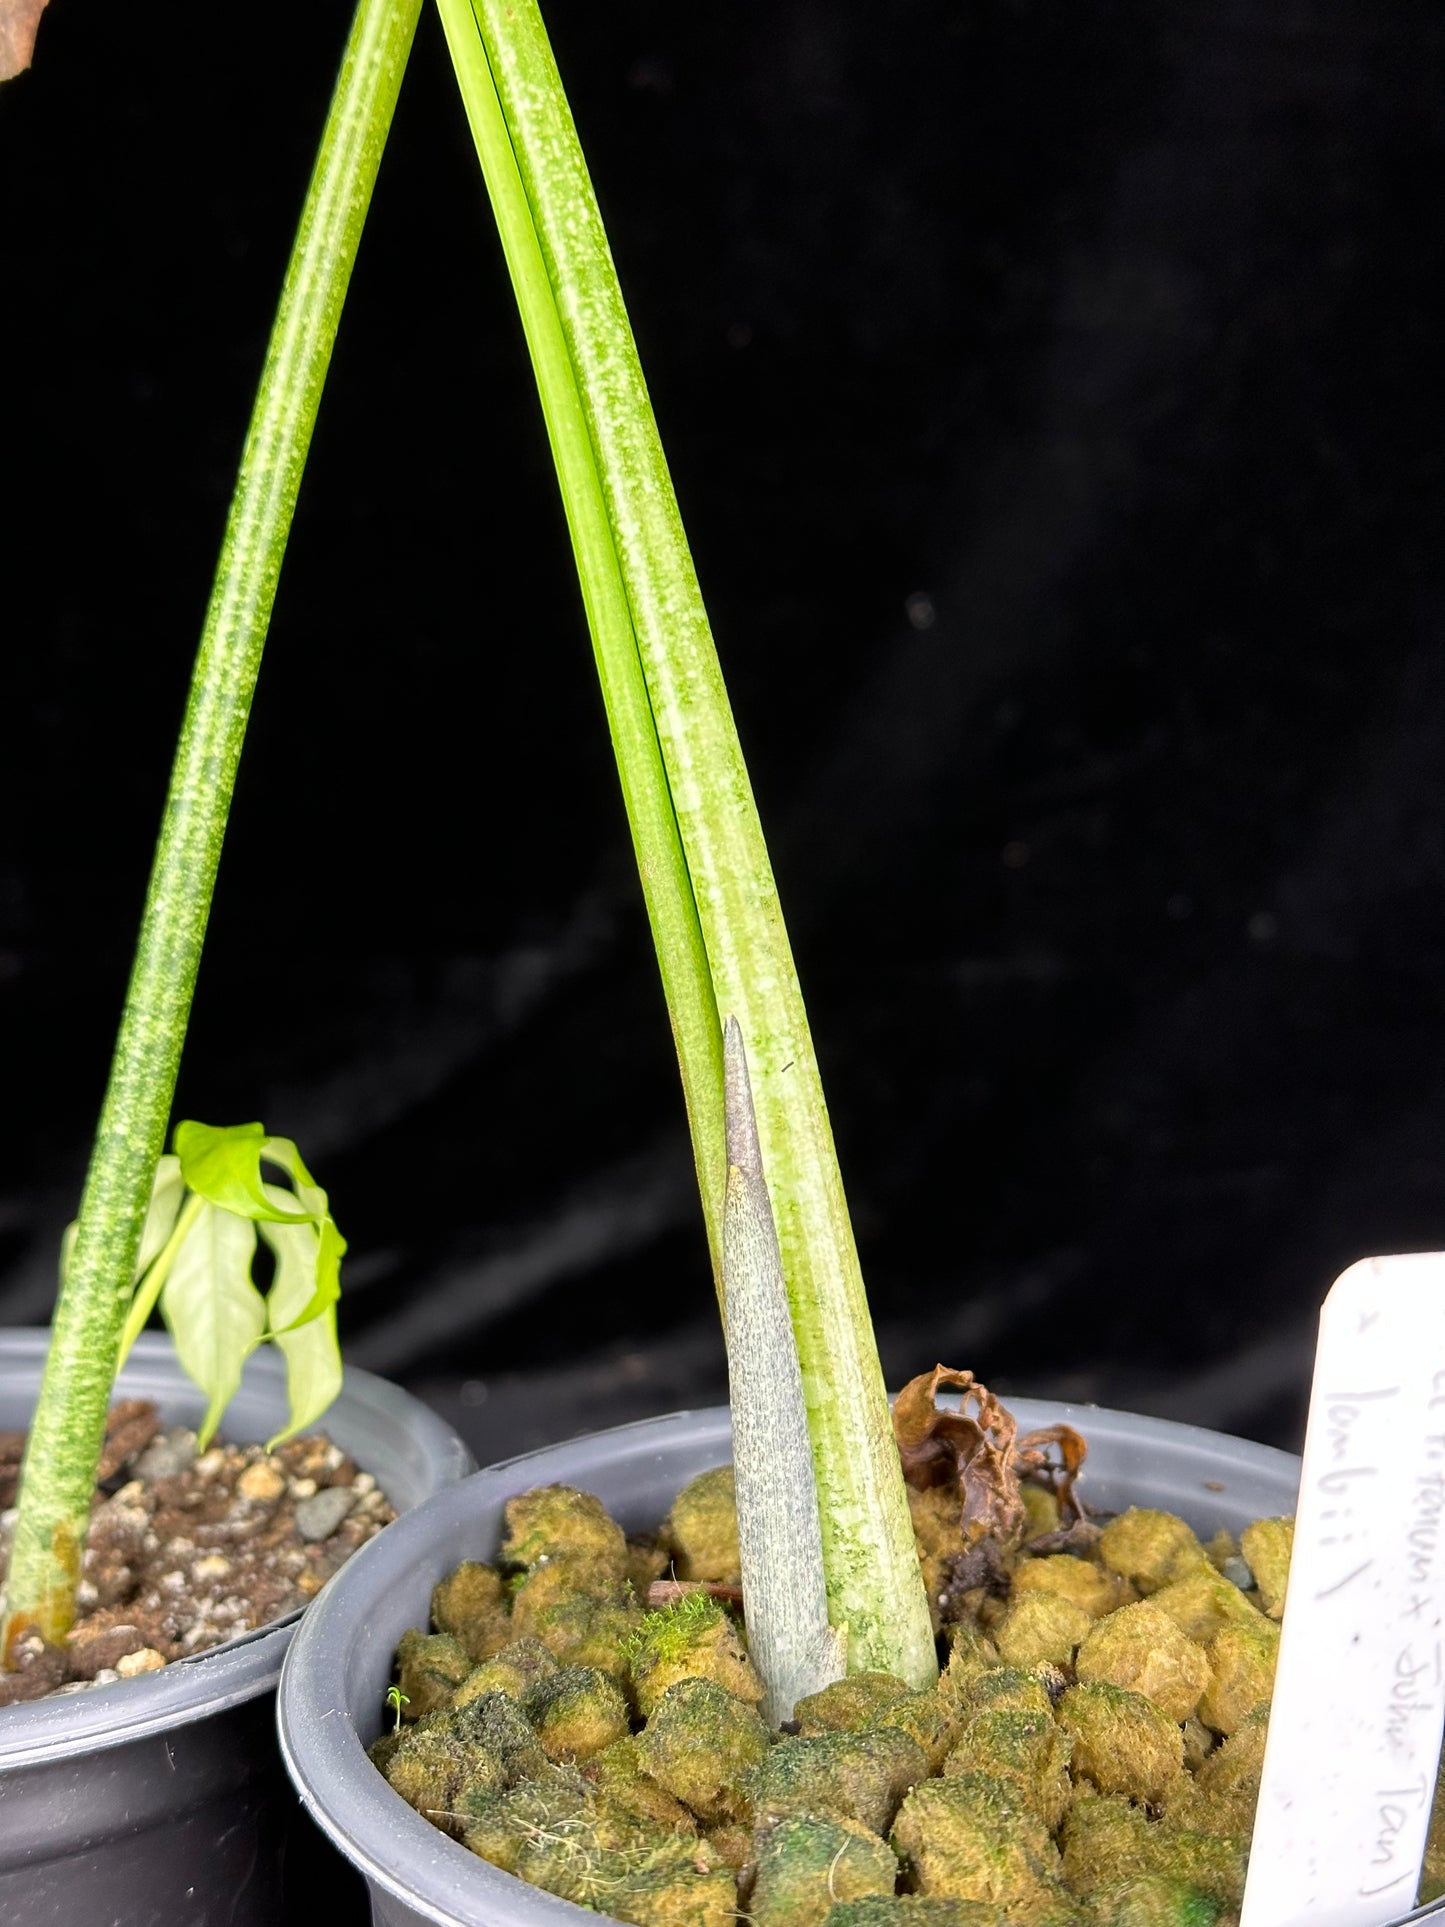 Amorphophallus ((titanum x John Tan) x lambii) - Large seedling PLANT (13+ inches tall) SEED GROWN